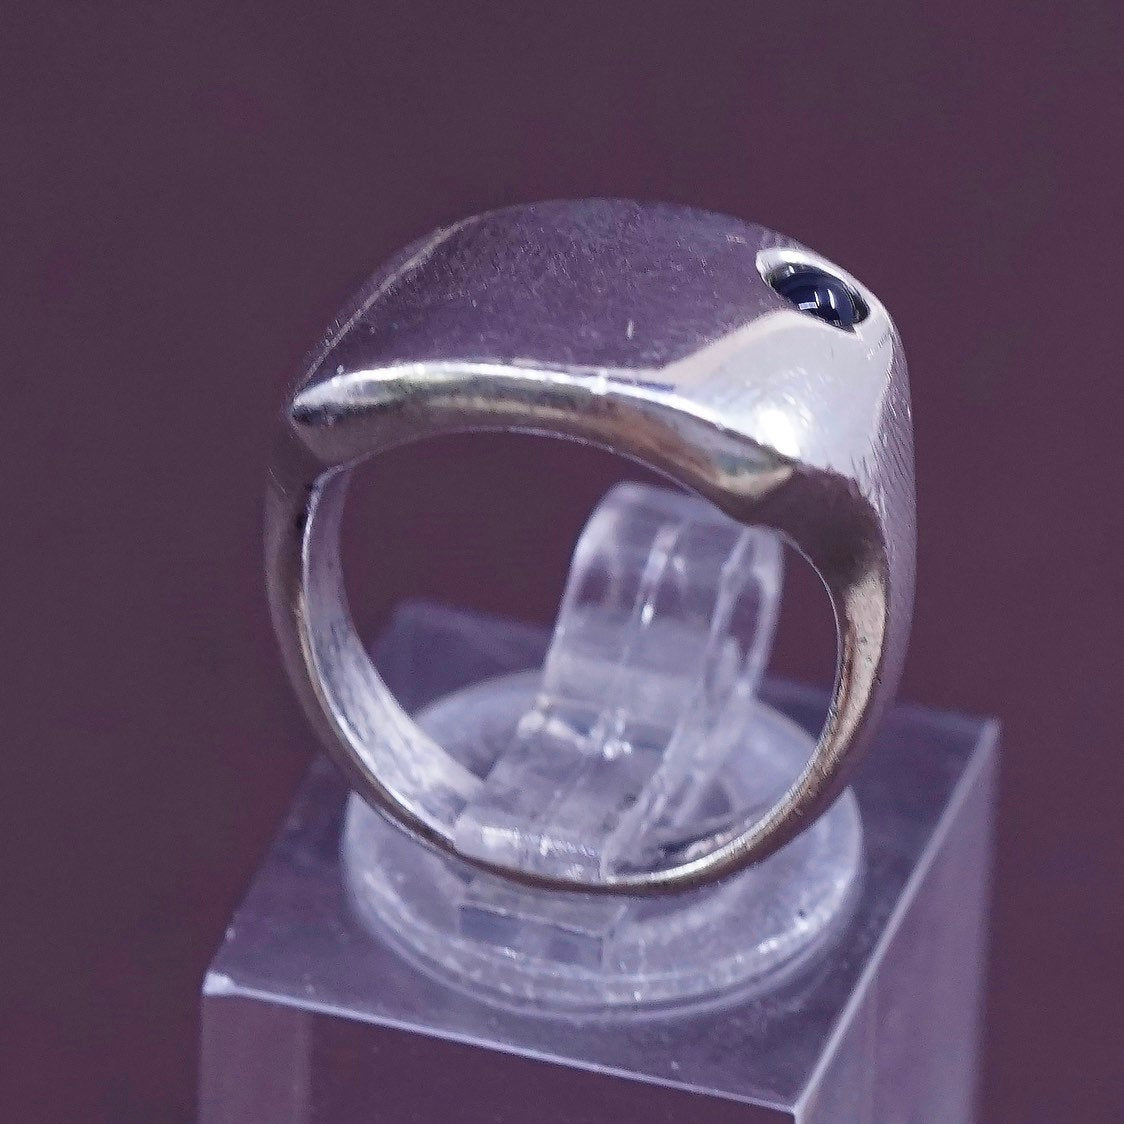 Size 6, vintage JAD Sterling silver ring, Modern 925 statement ring w/ jade